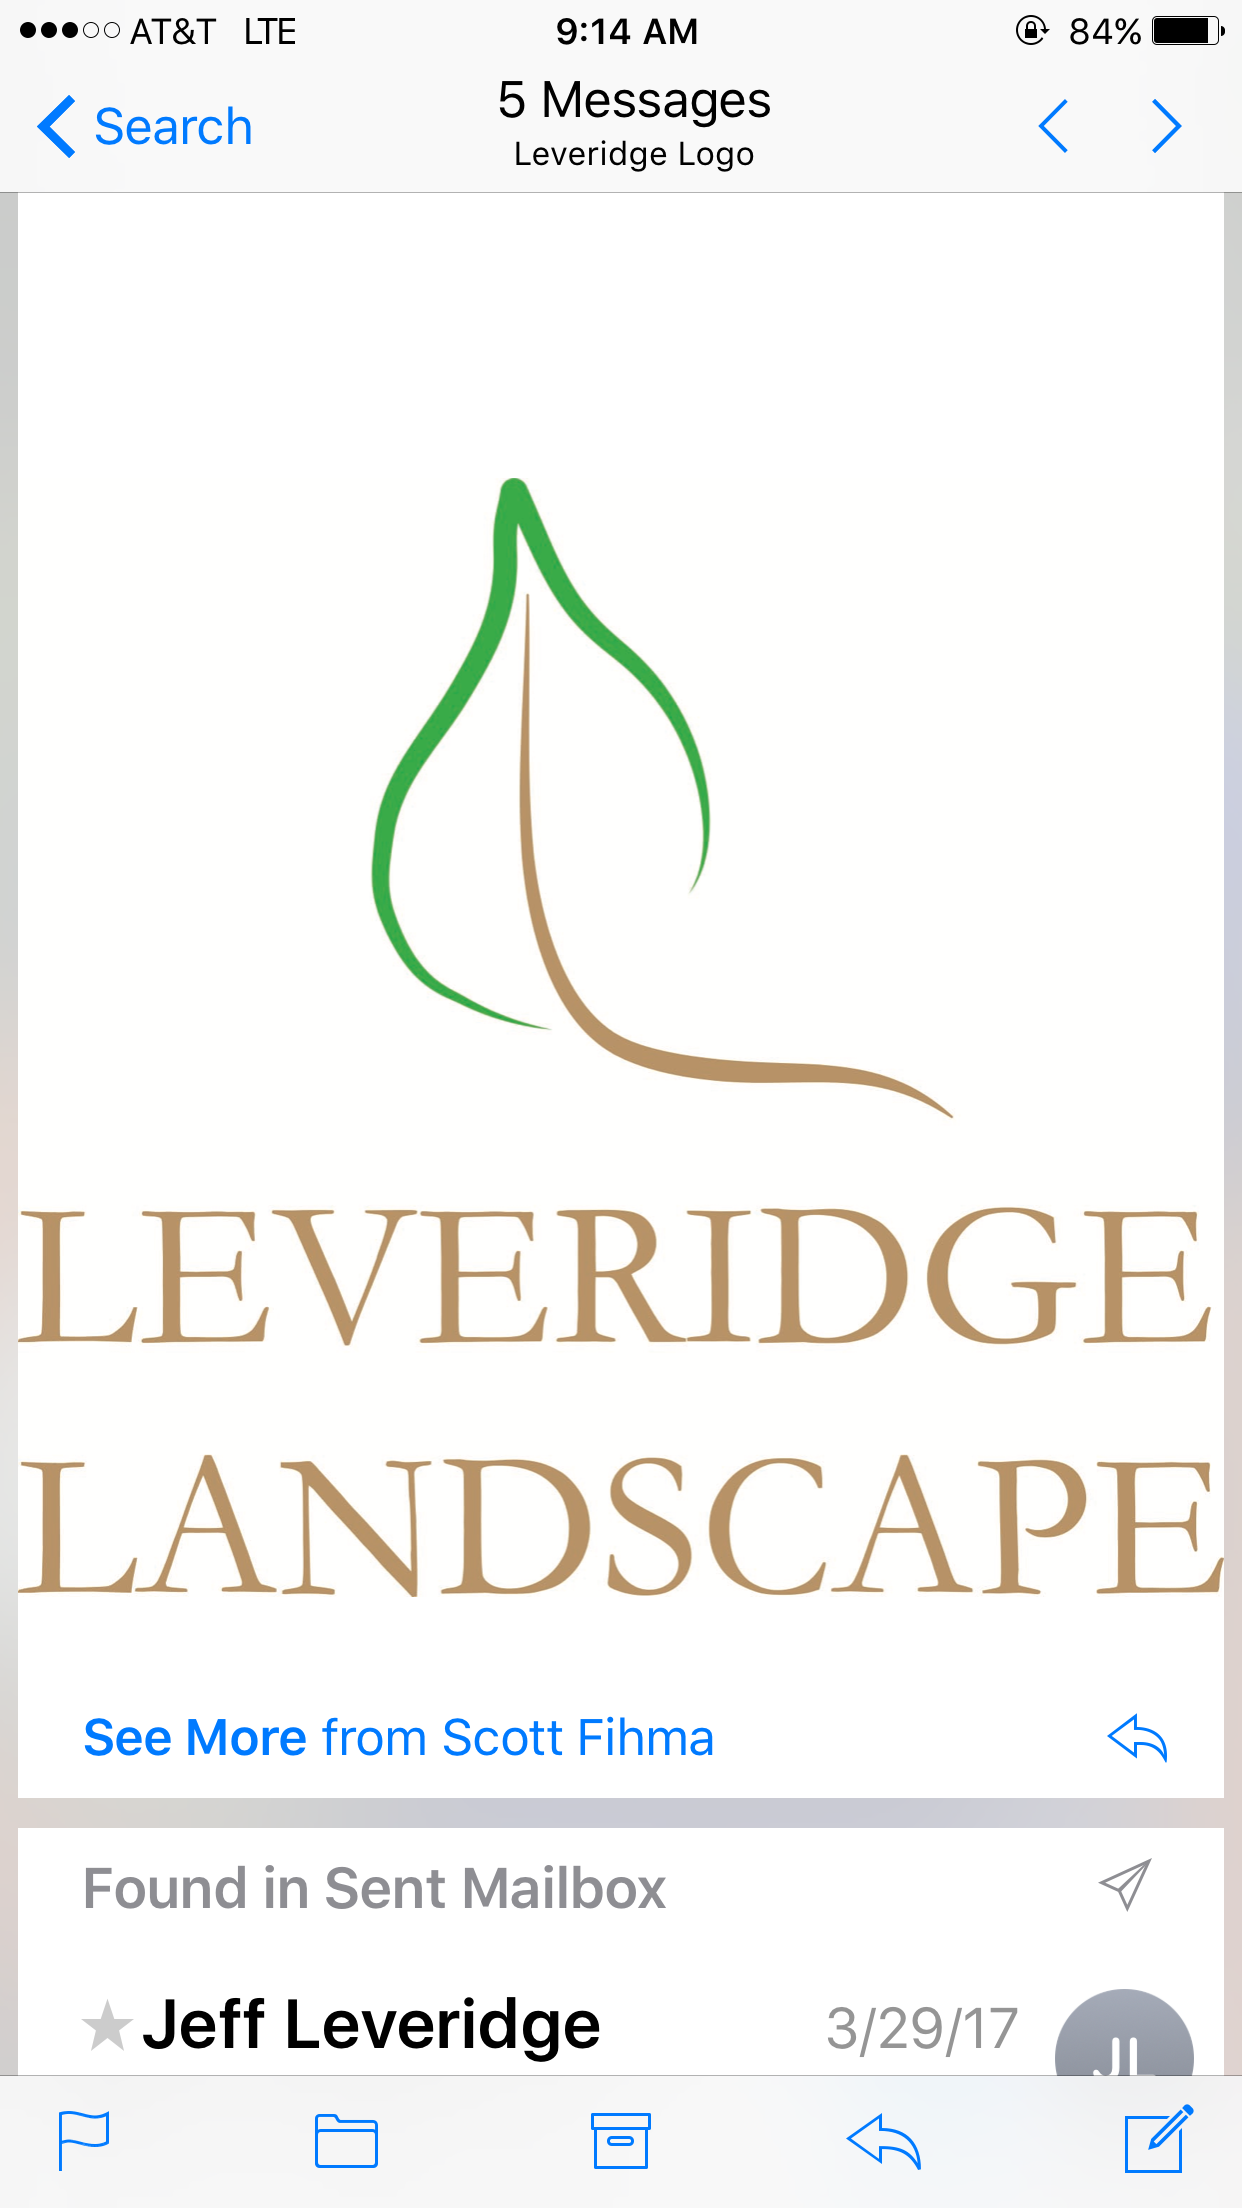 Leveridge Logo